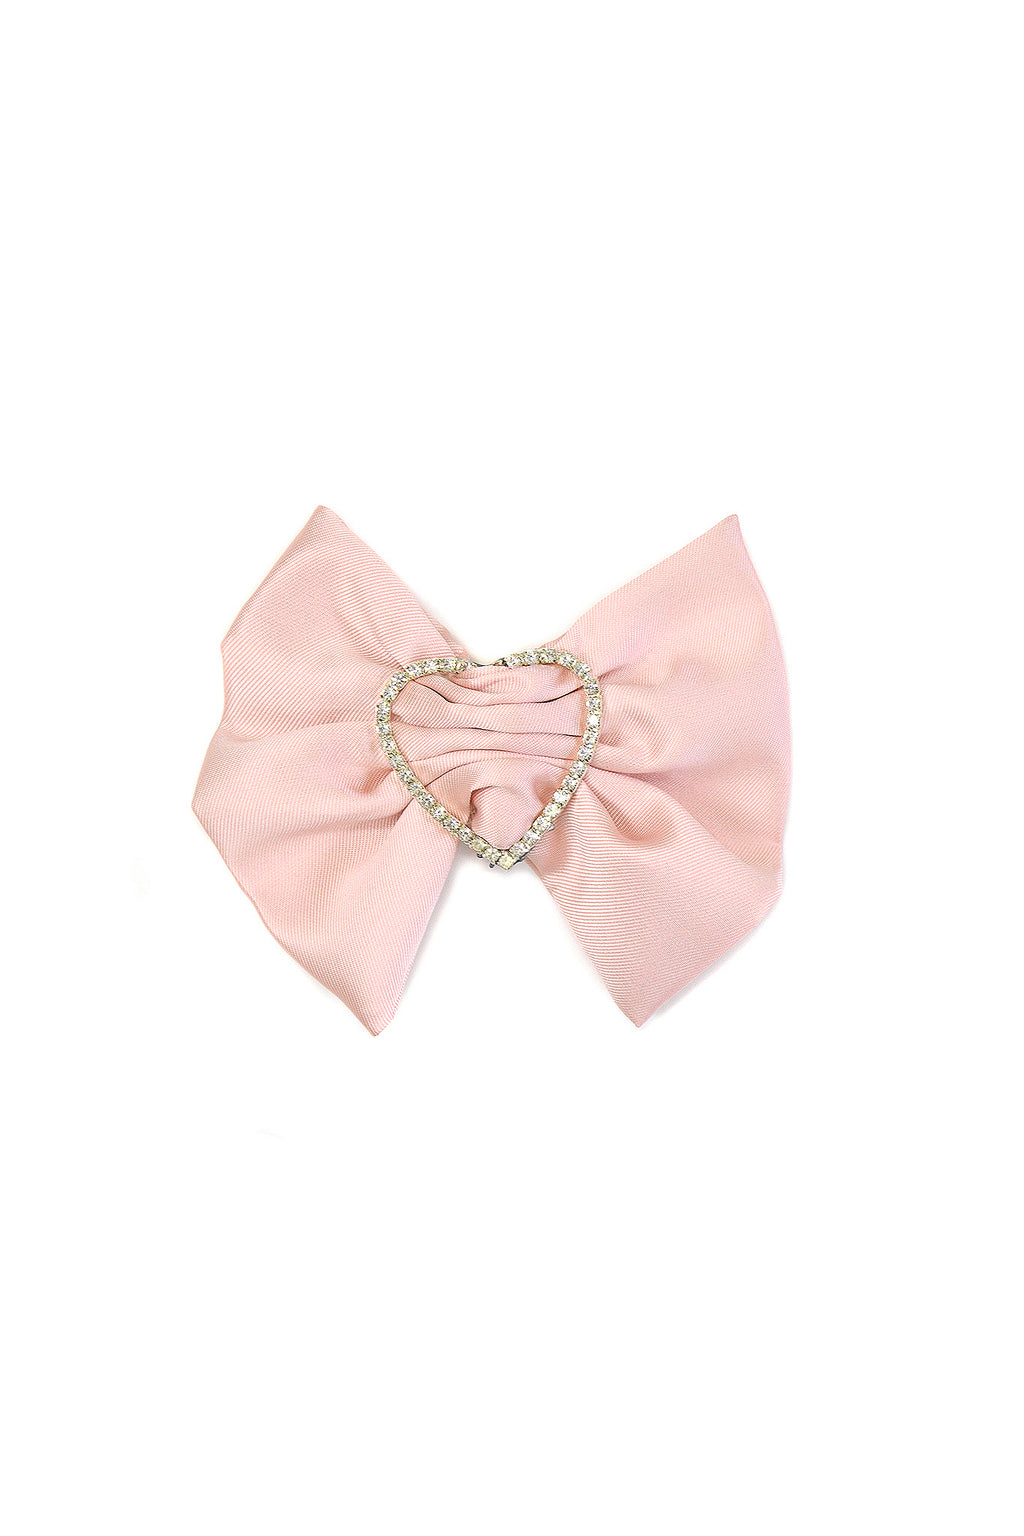 Merrfer Hair Bow, Ballerina Pink